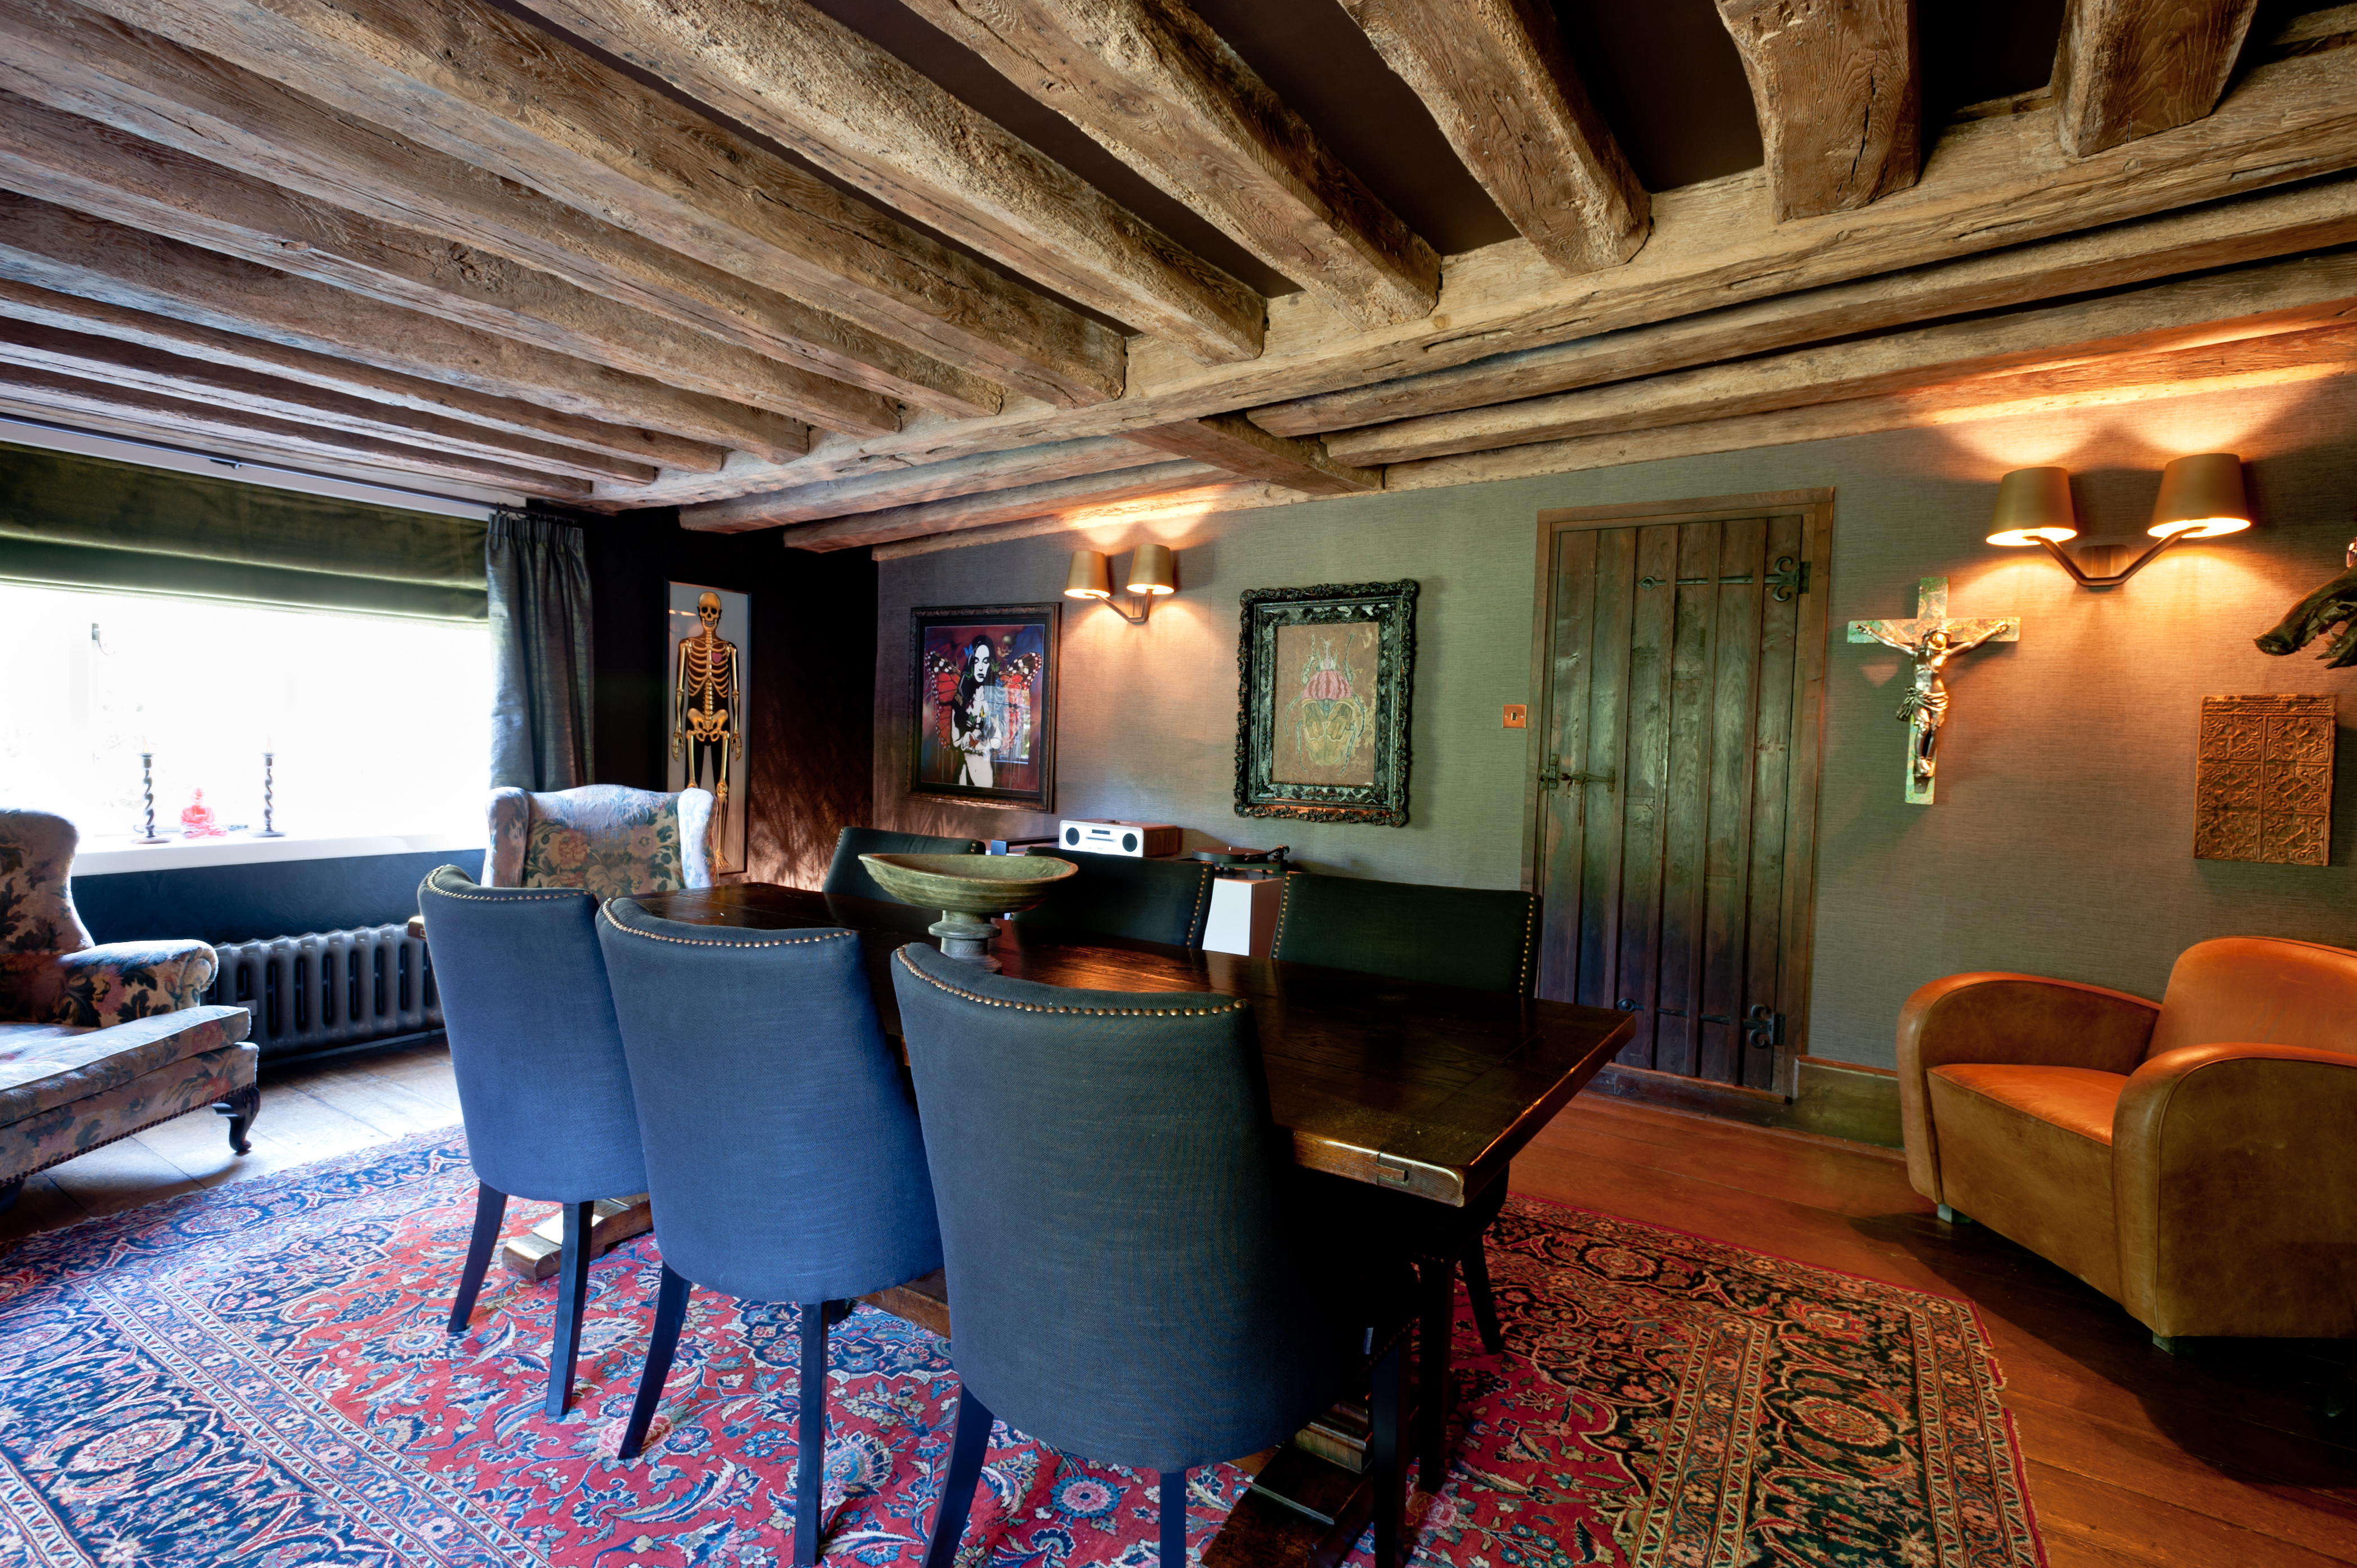 Livingroom with wooden beams